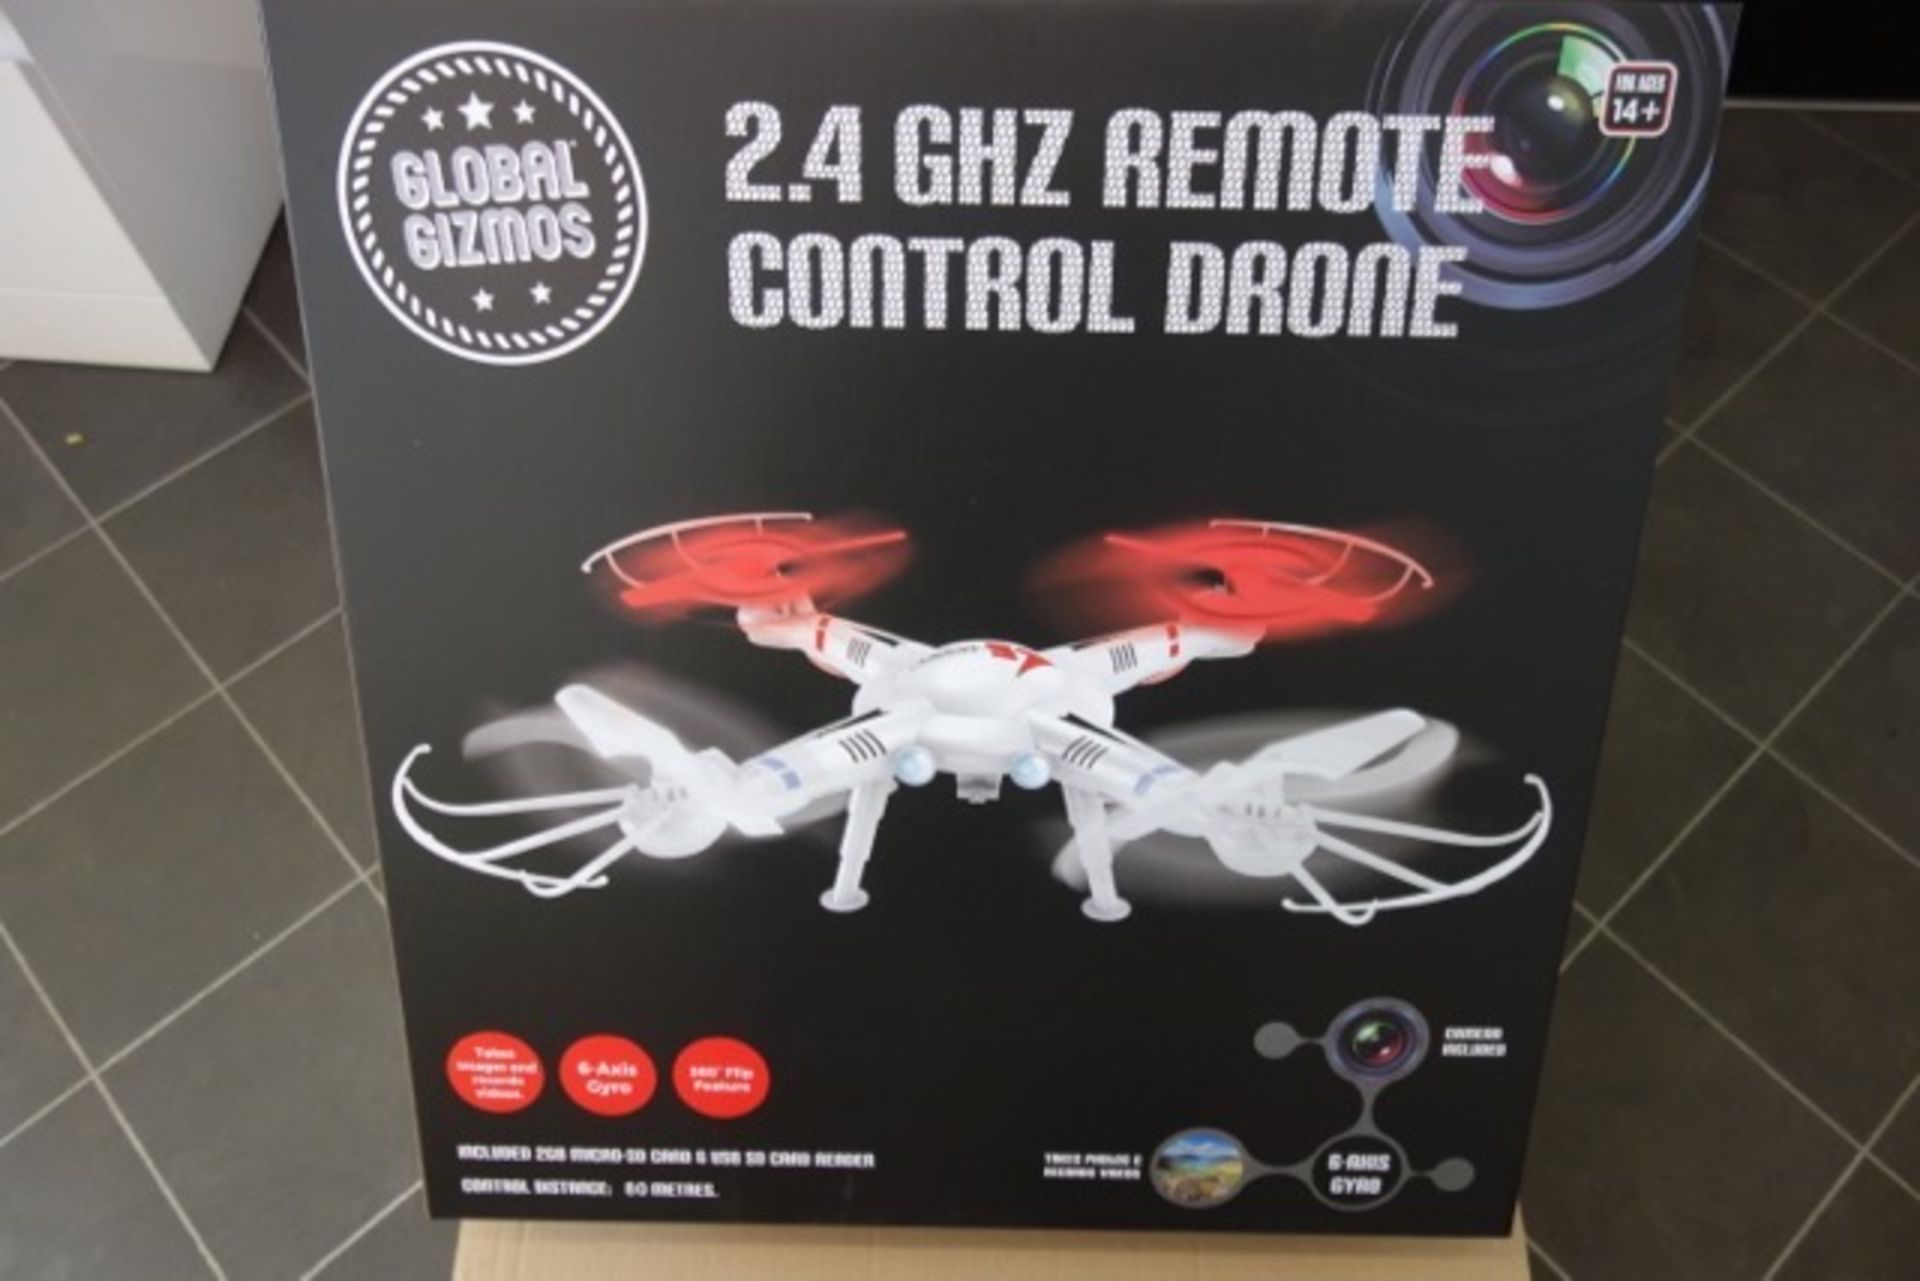 1 x Brand New Global Gizmos 2.4GHZ Remote Control Drone. Takes images & recordes videos, 6 axis - Bild 4 aus 4